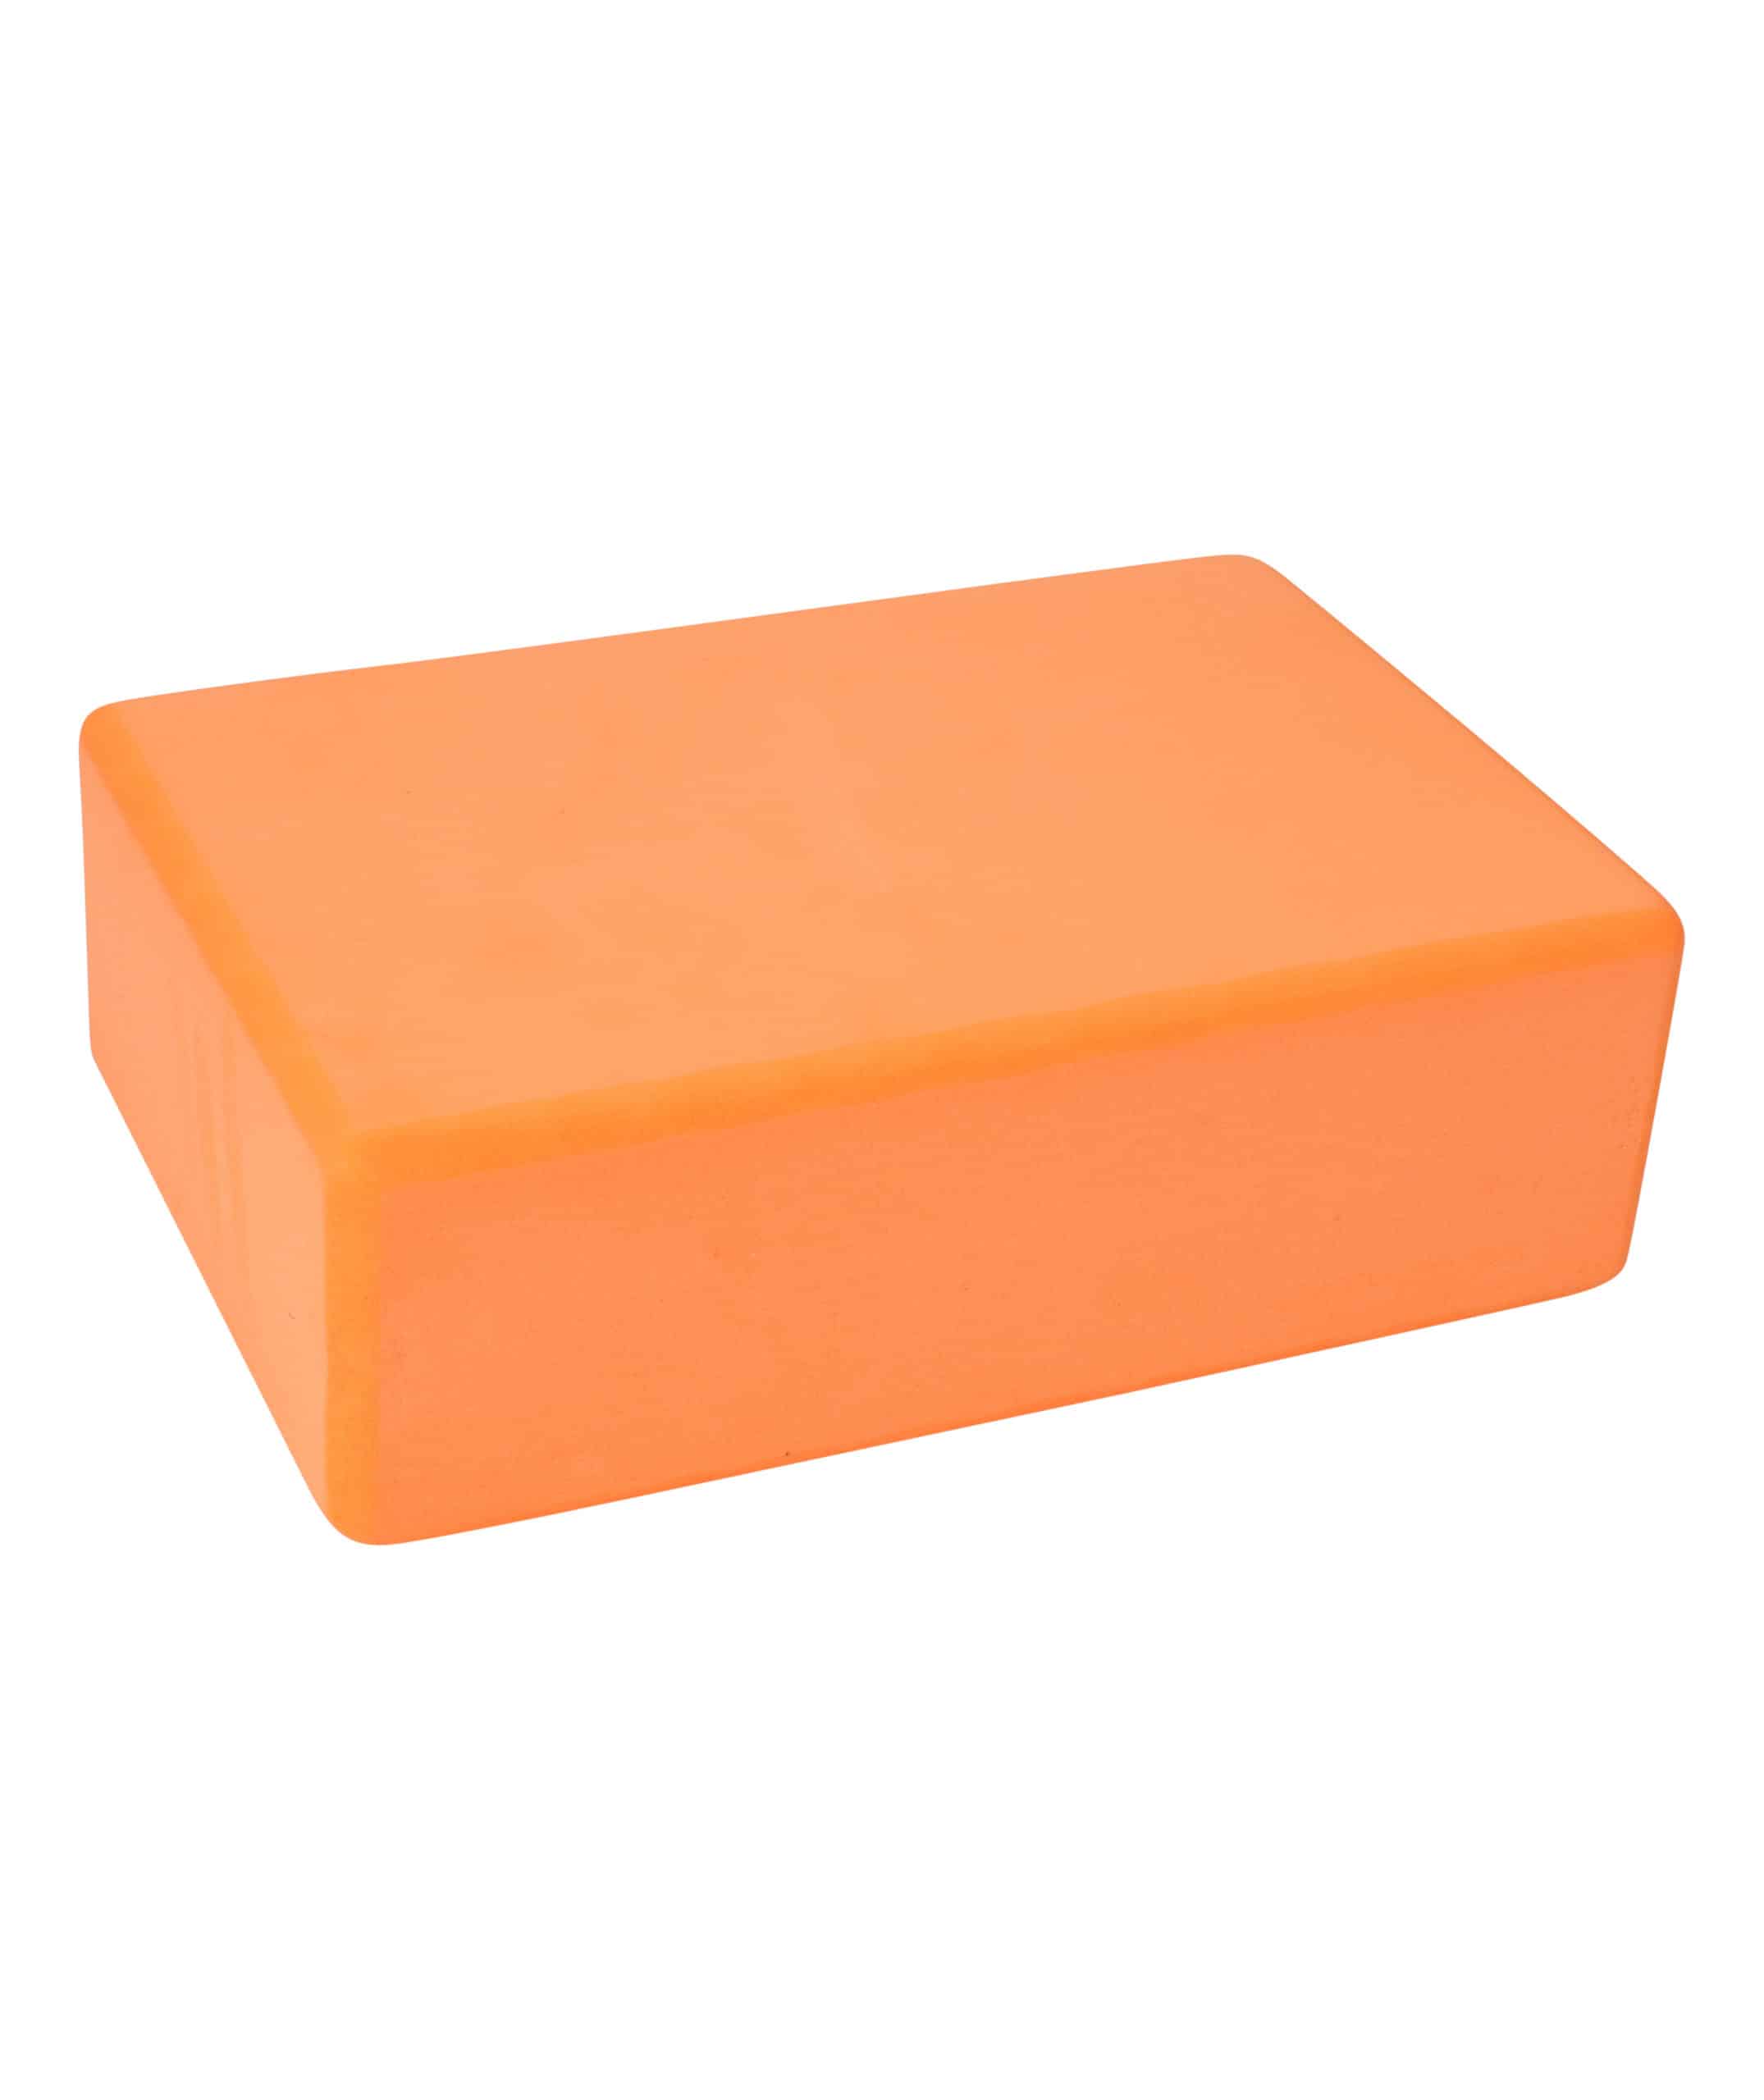 Orange Yoga Block - Lightweight, Strong, Soft Touch